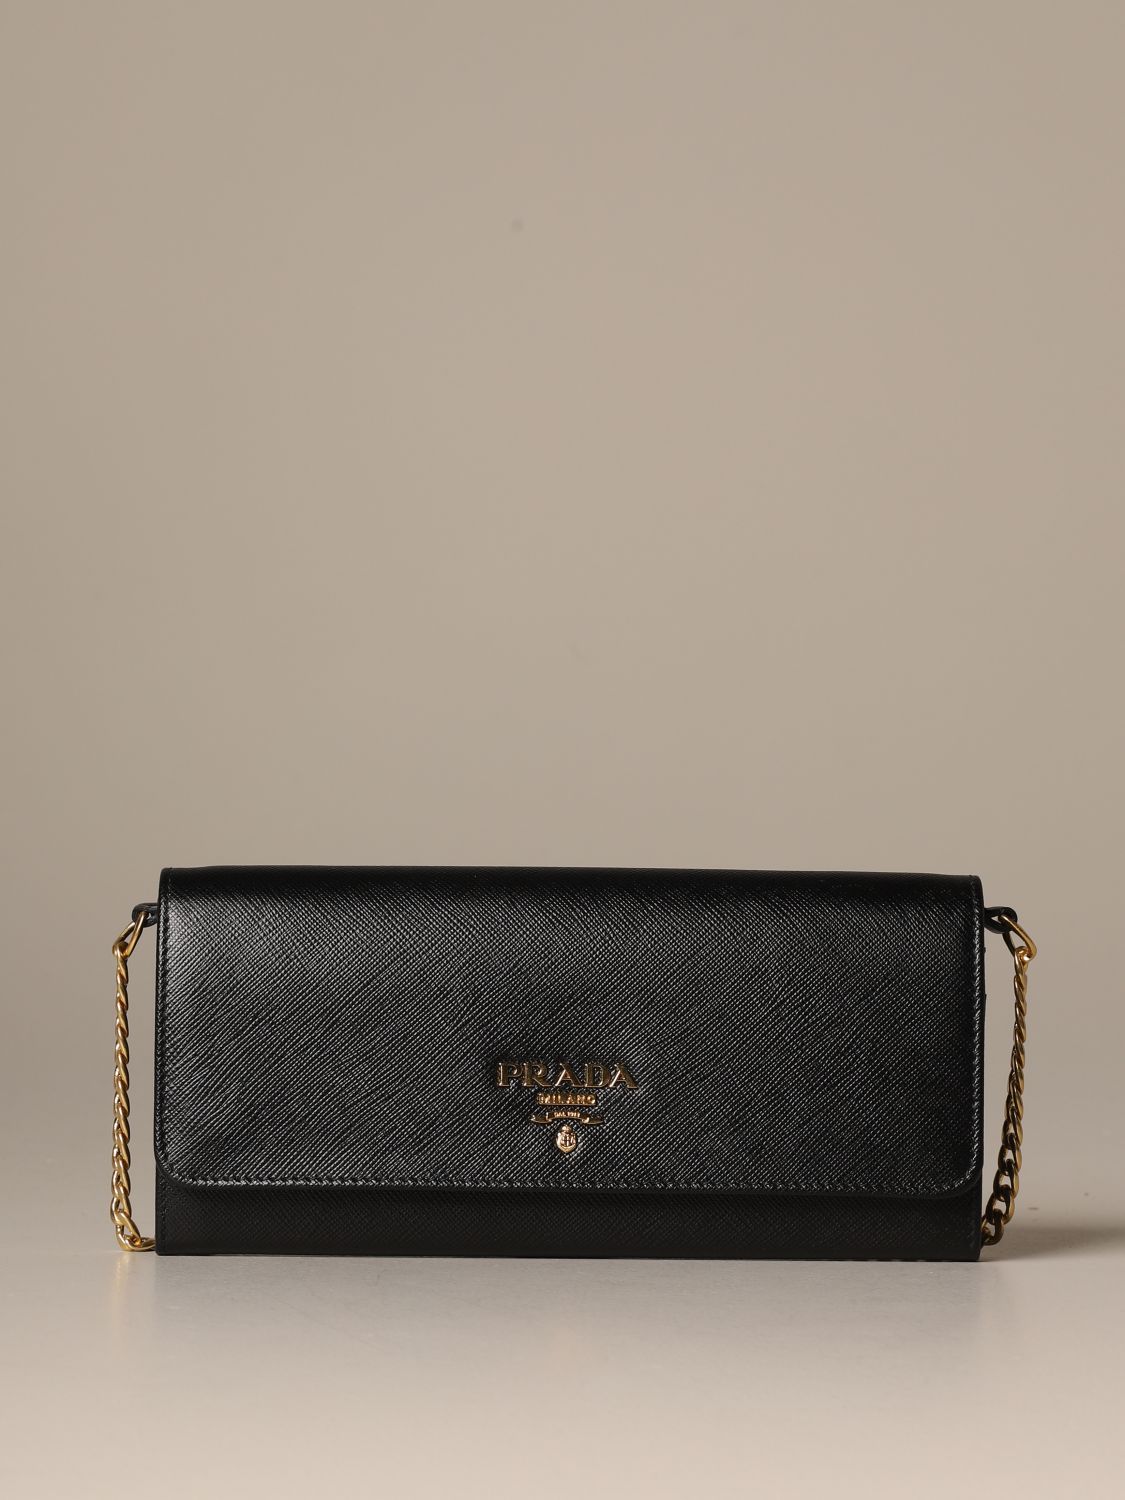 PRADA: shoulder bag in genuine saffiano leather - Black | Prada mini bag  1MT290 QWA online on 